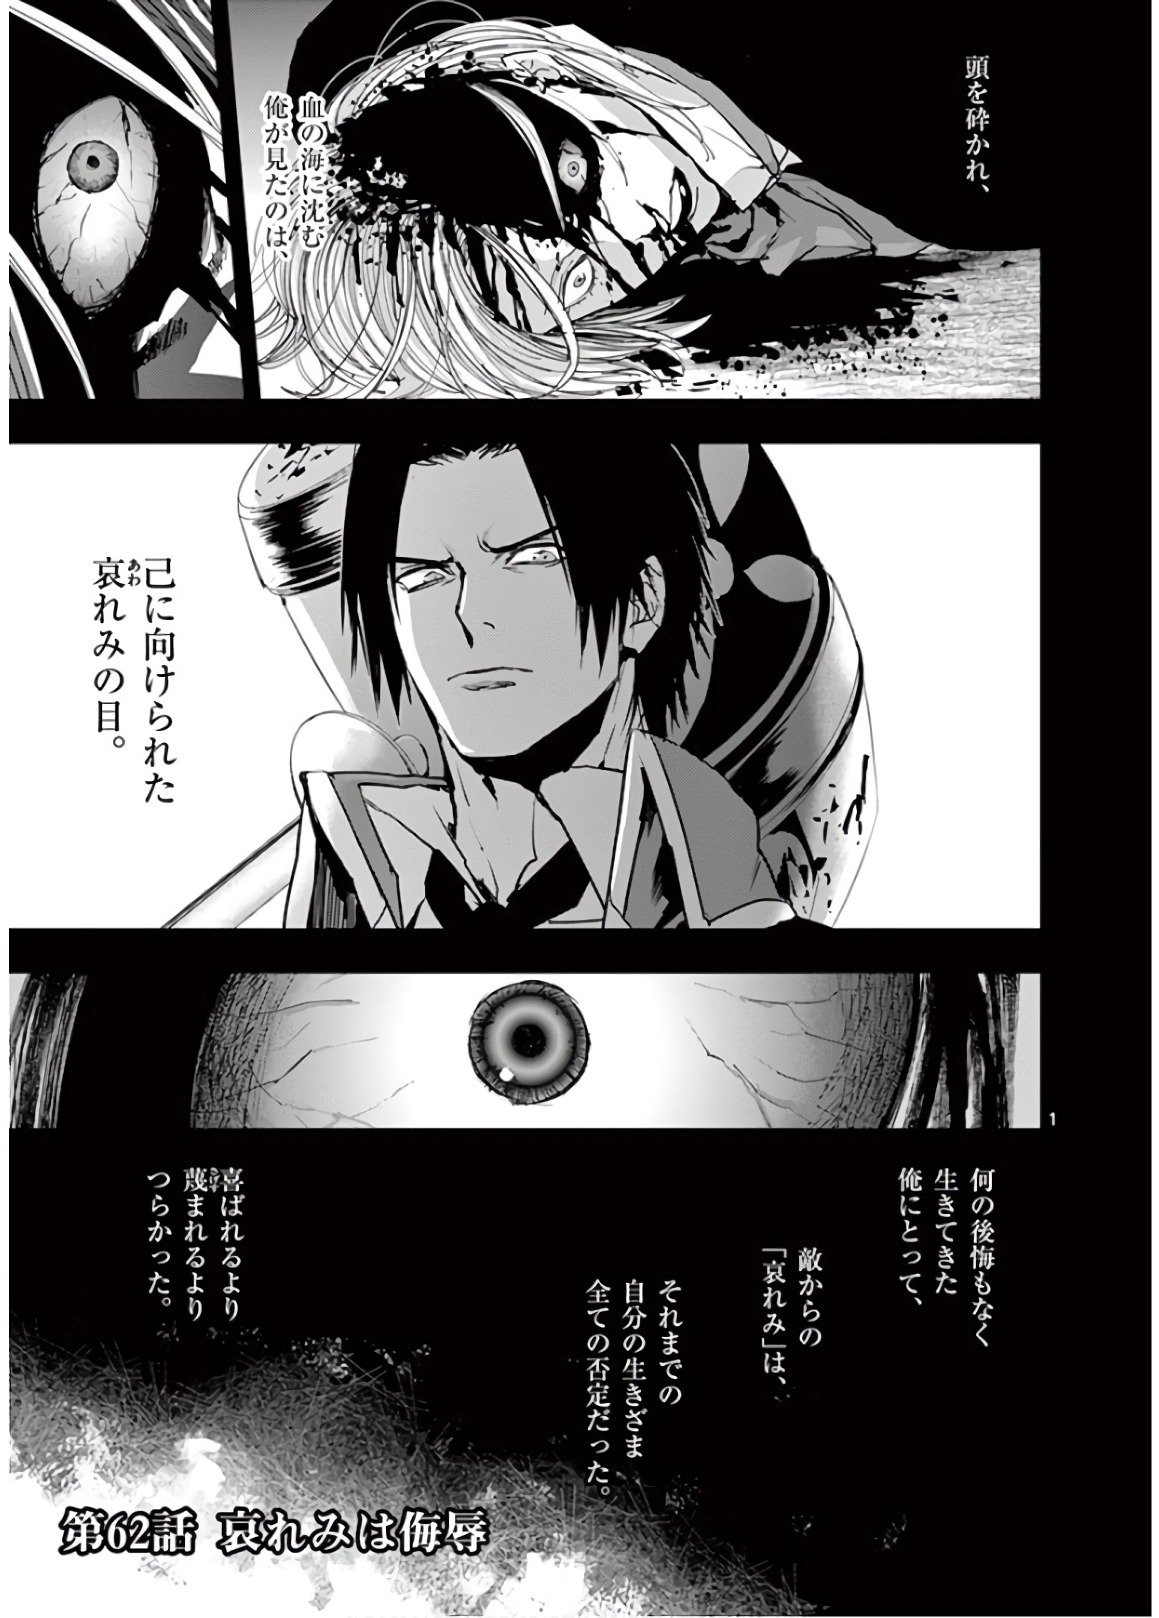 Ginrou Bloodborne - Chapter 62 - Page 1